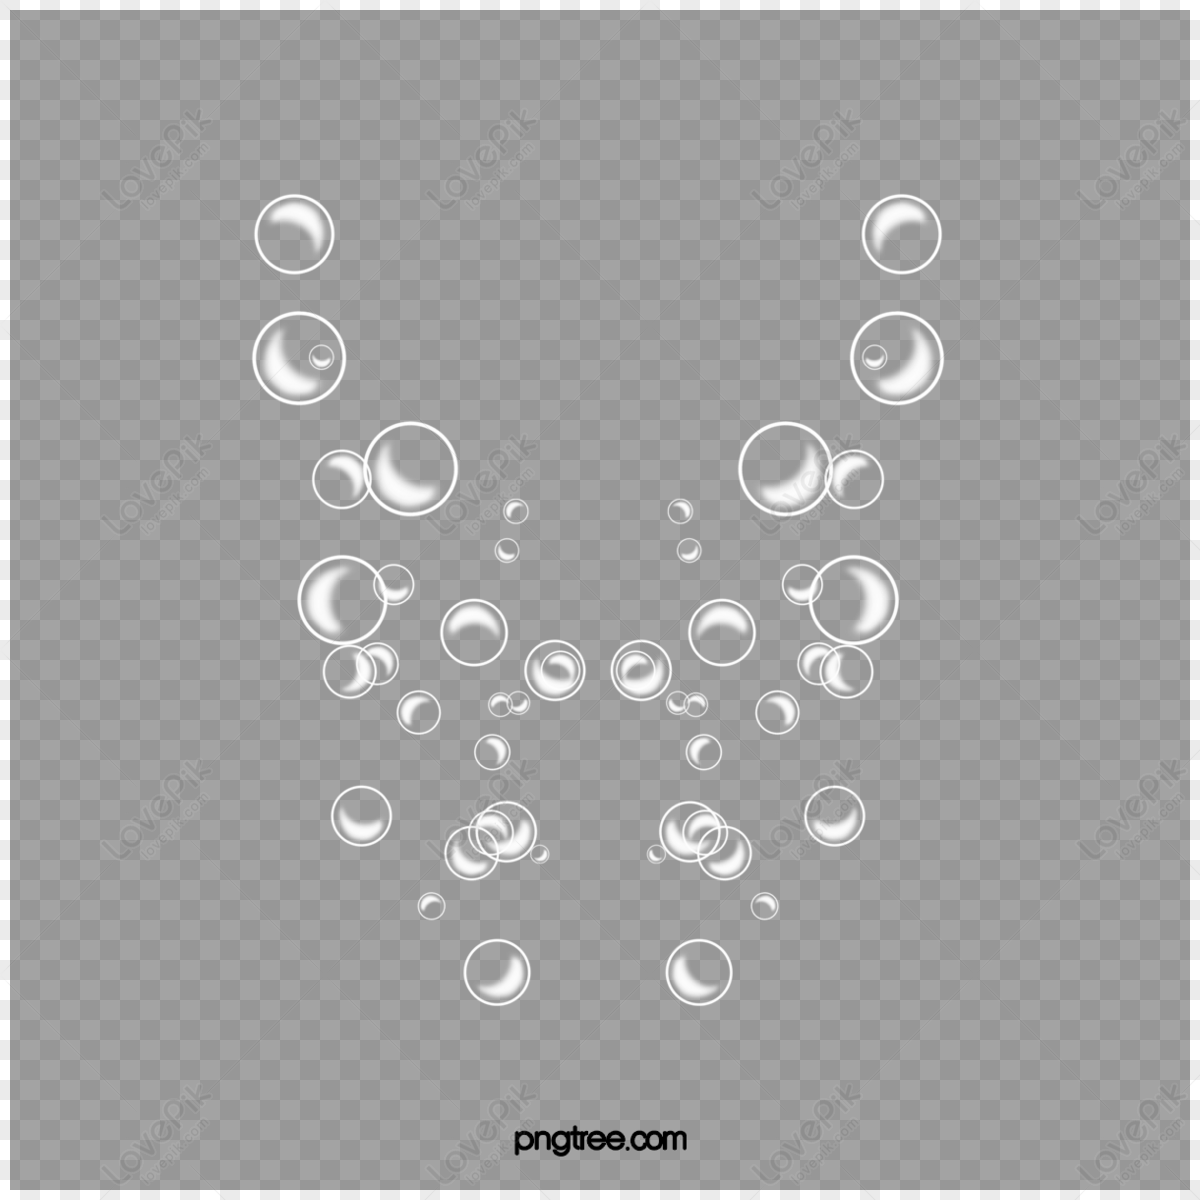 Bubble PNG, Transparent Background Water Bubble PNG Images, Vectors (Free  Download) - Pngtree